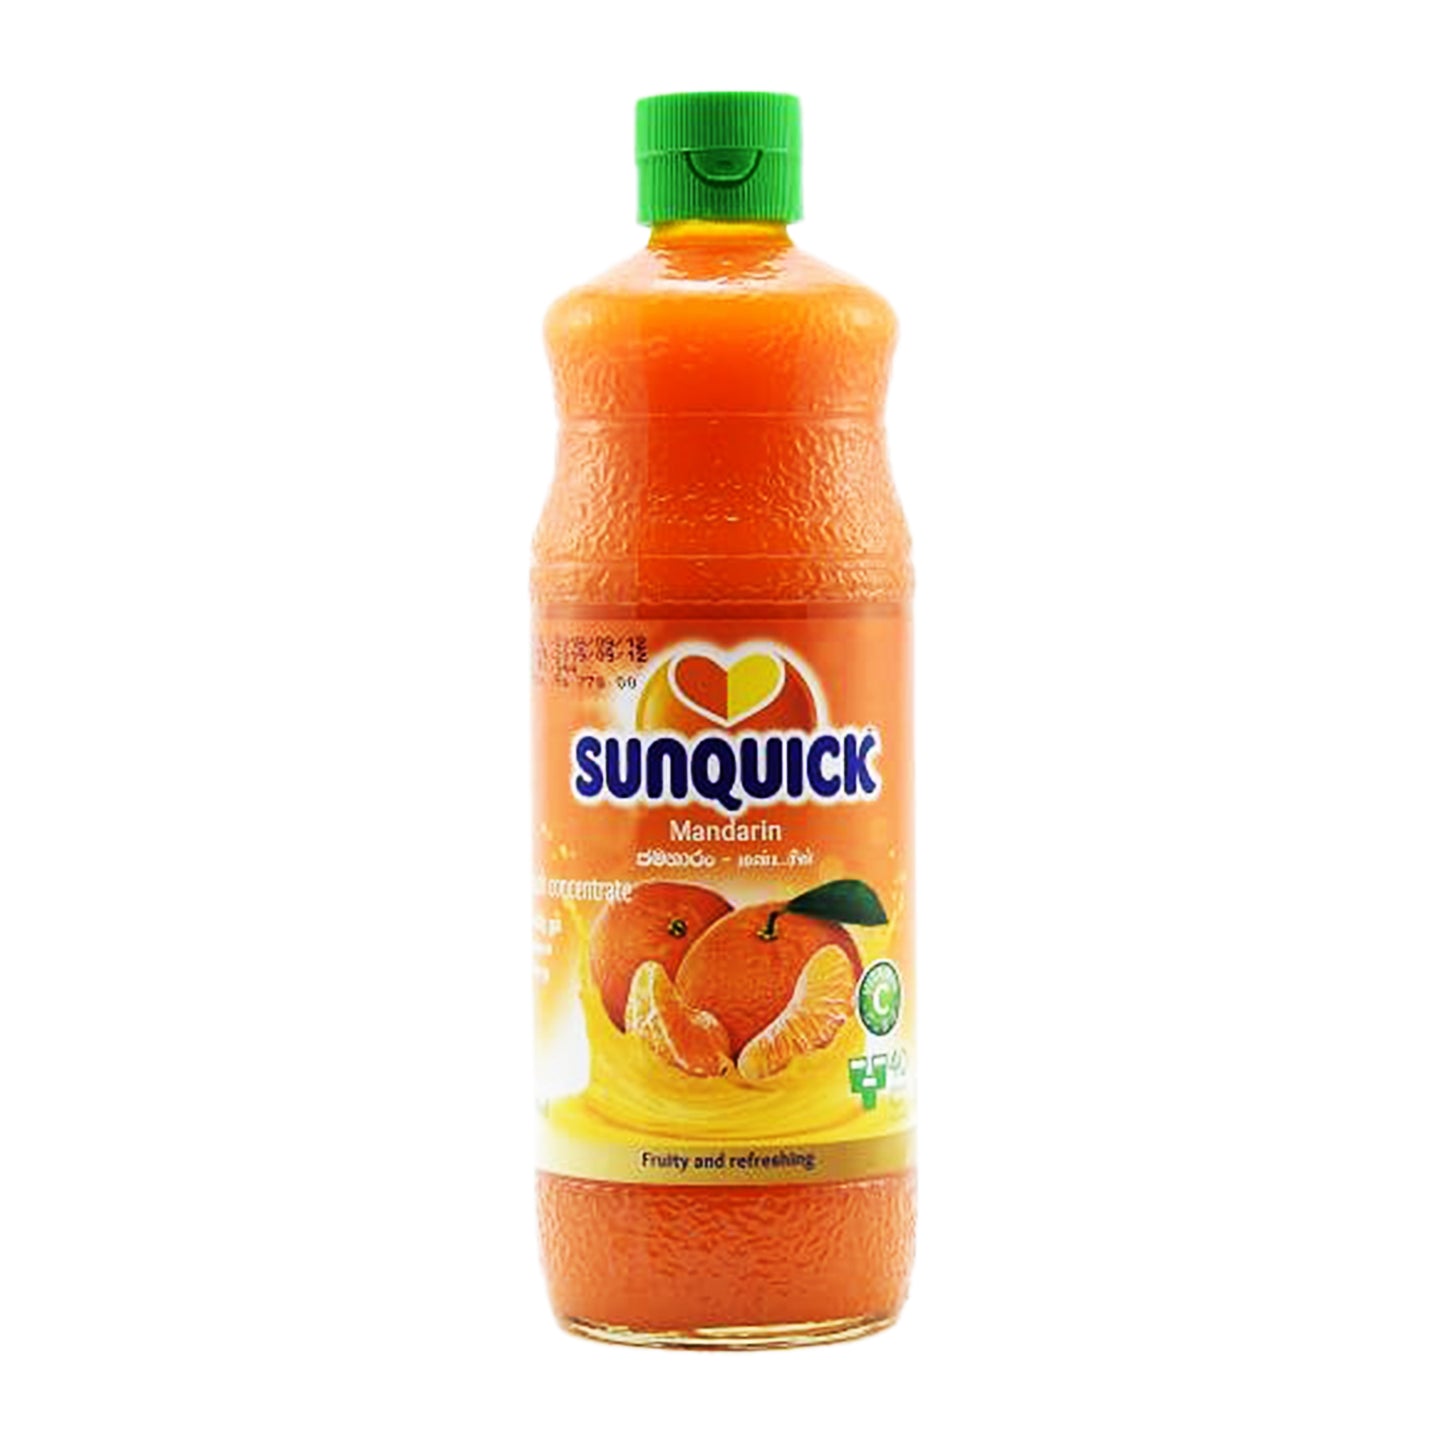 Sunquick Mandarin (700ml)